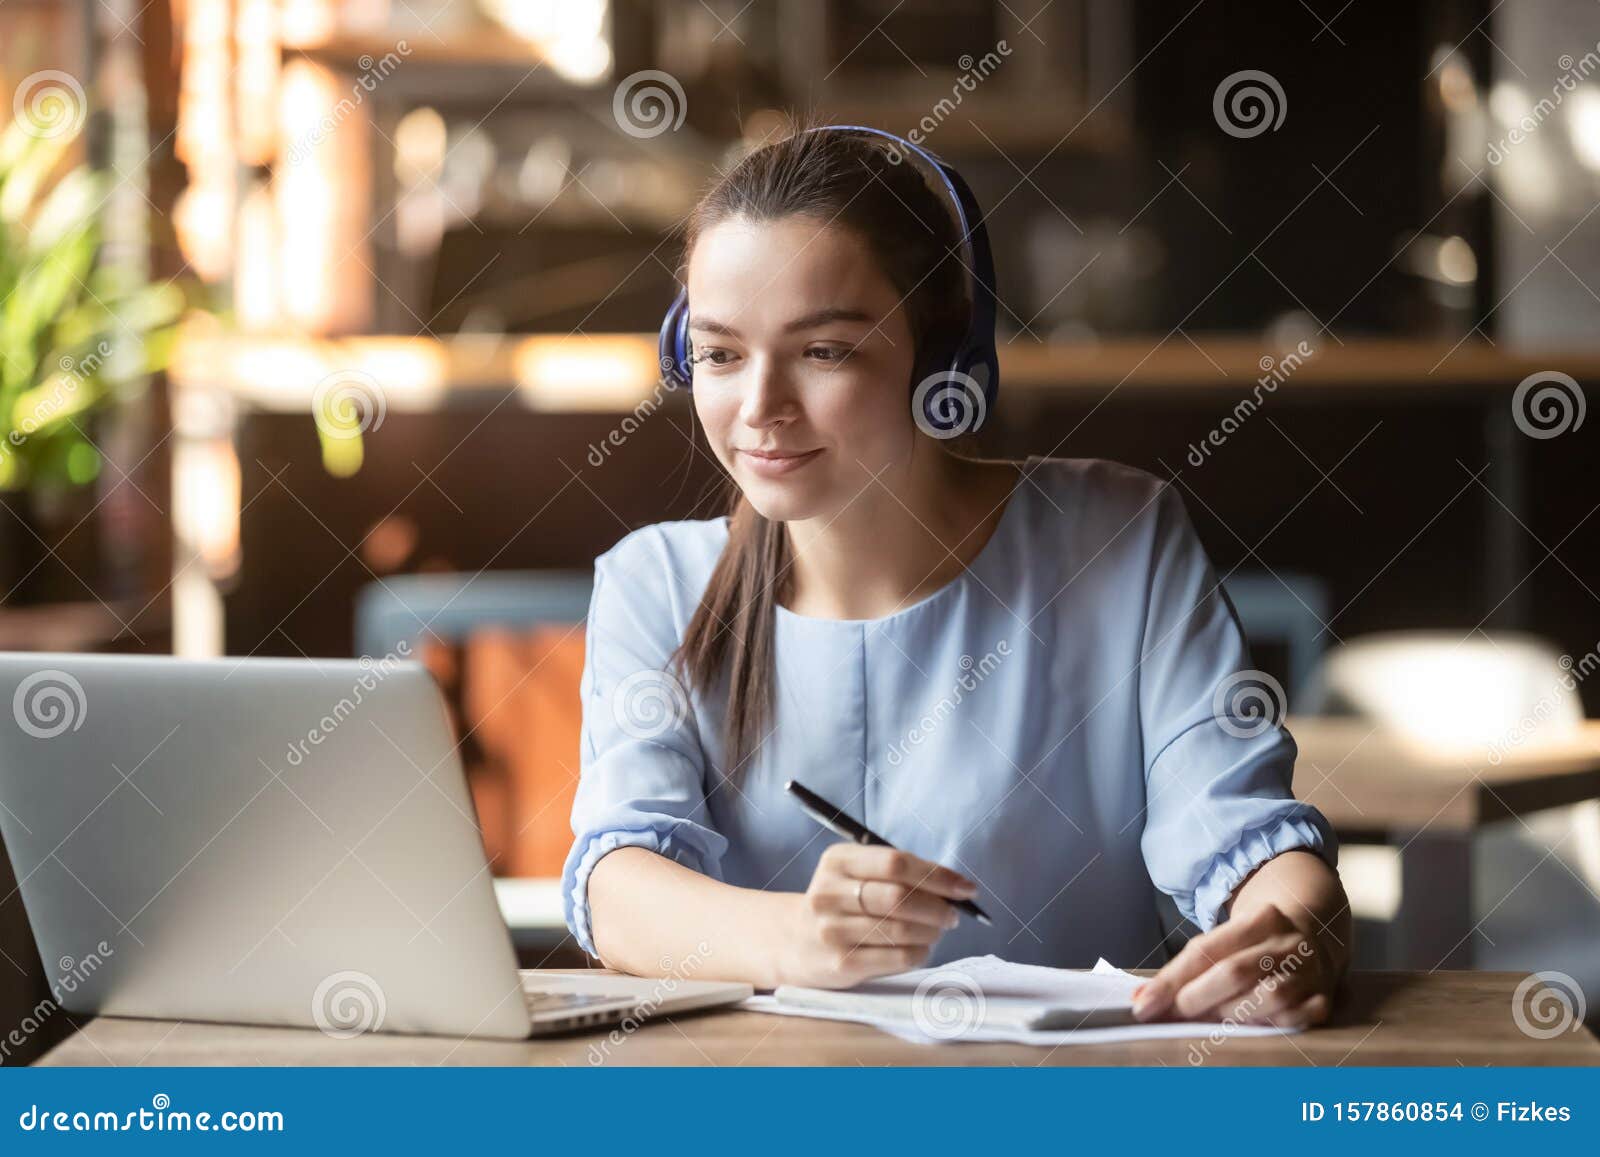 focused woman wearing headphones using laptop, writing notes